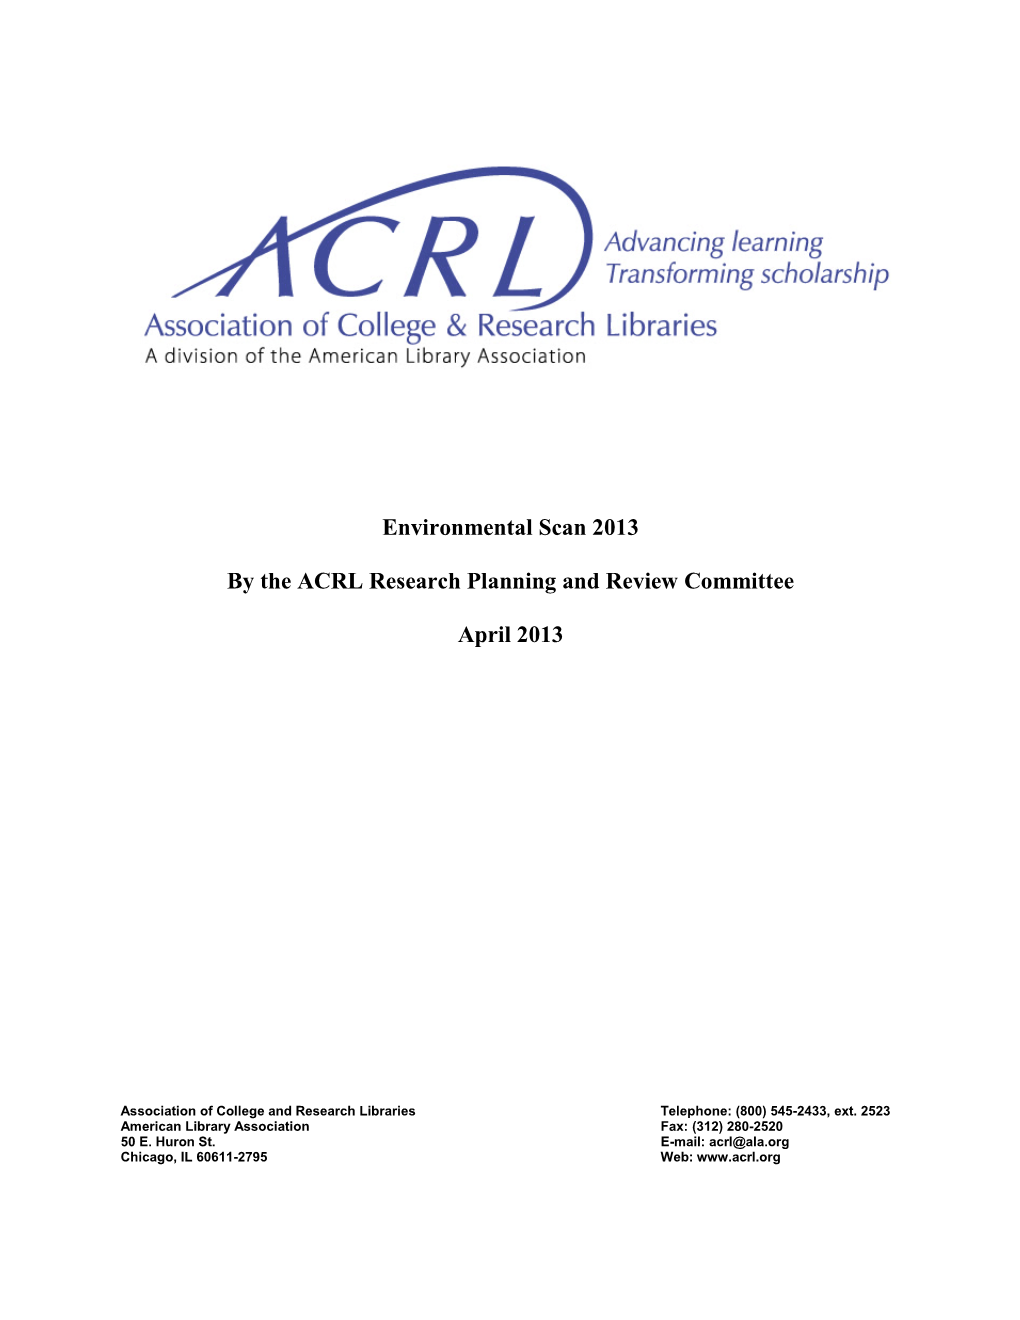 ACRL Environmental Scan